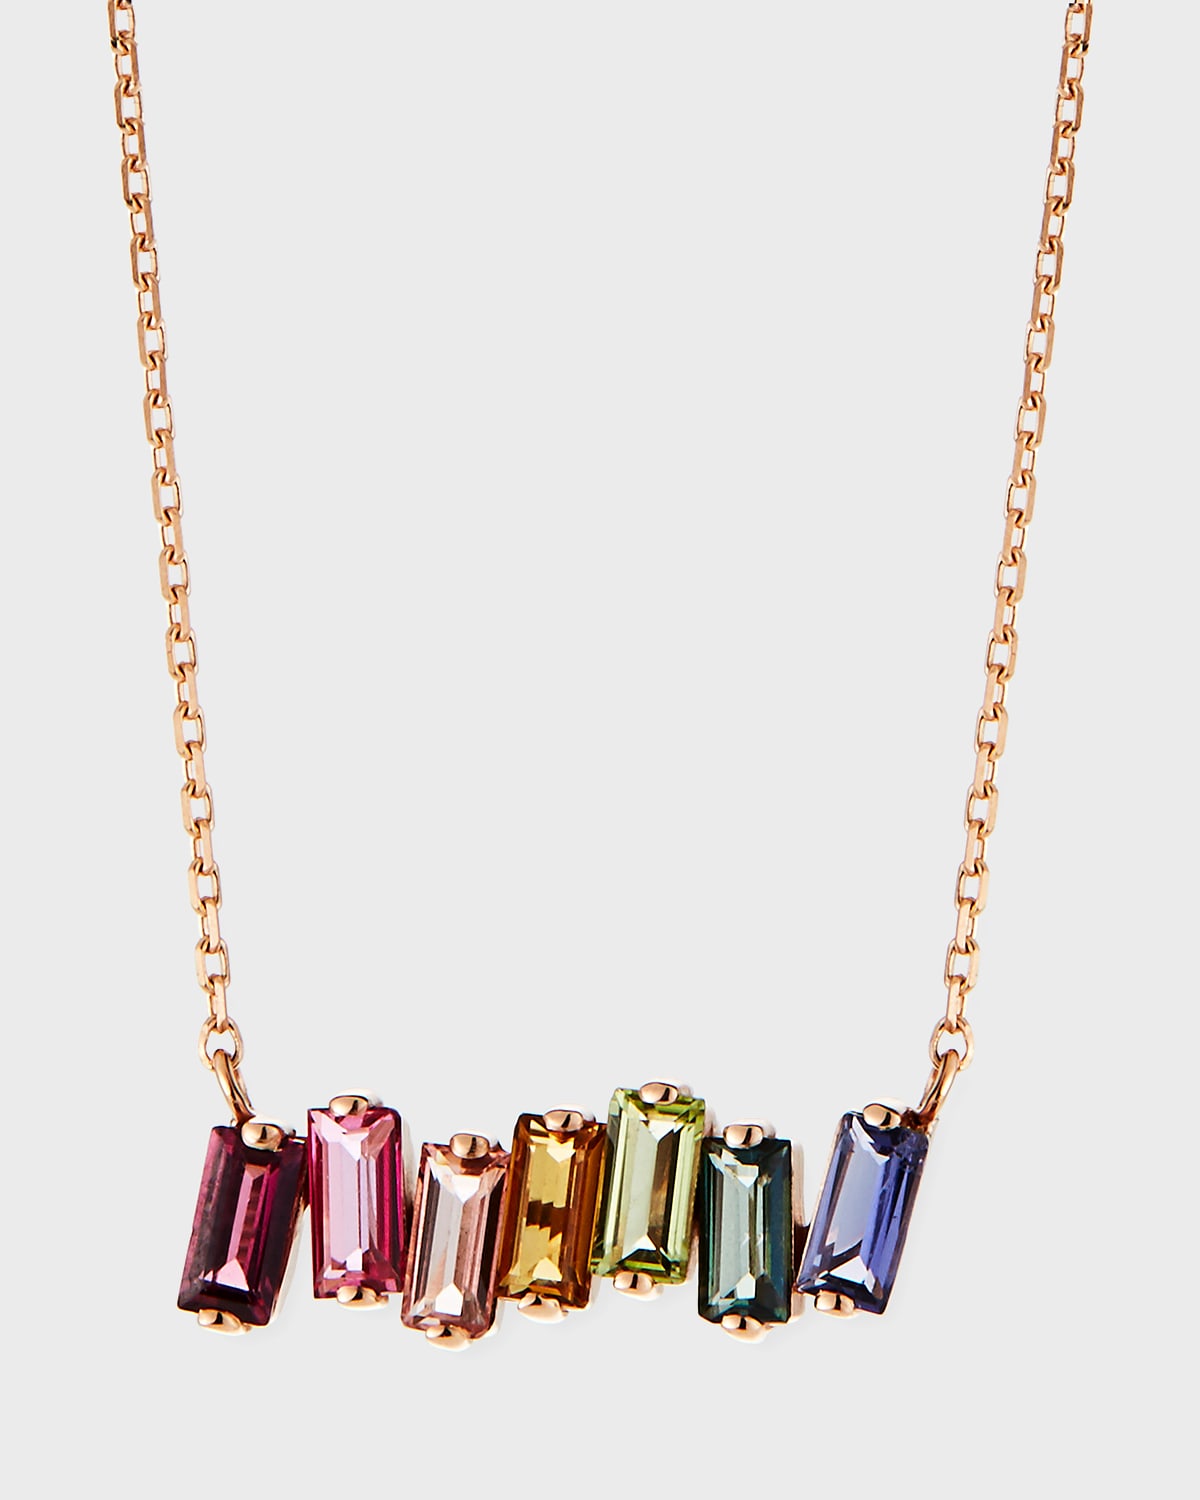 14K Rose Gold Rainbow Bar Necklace